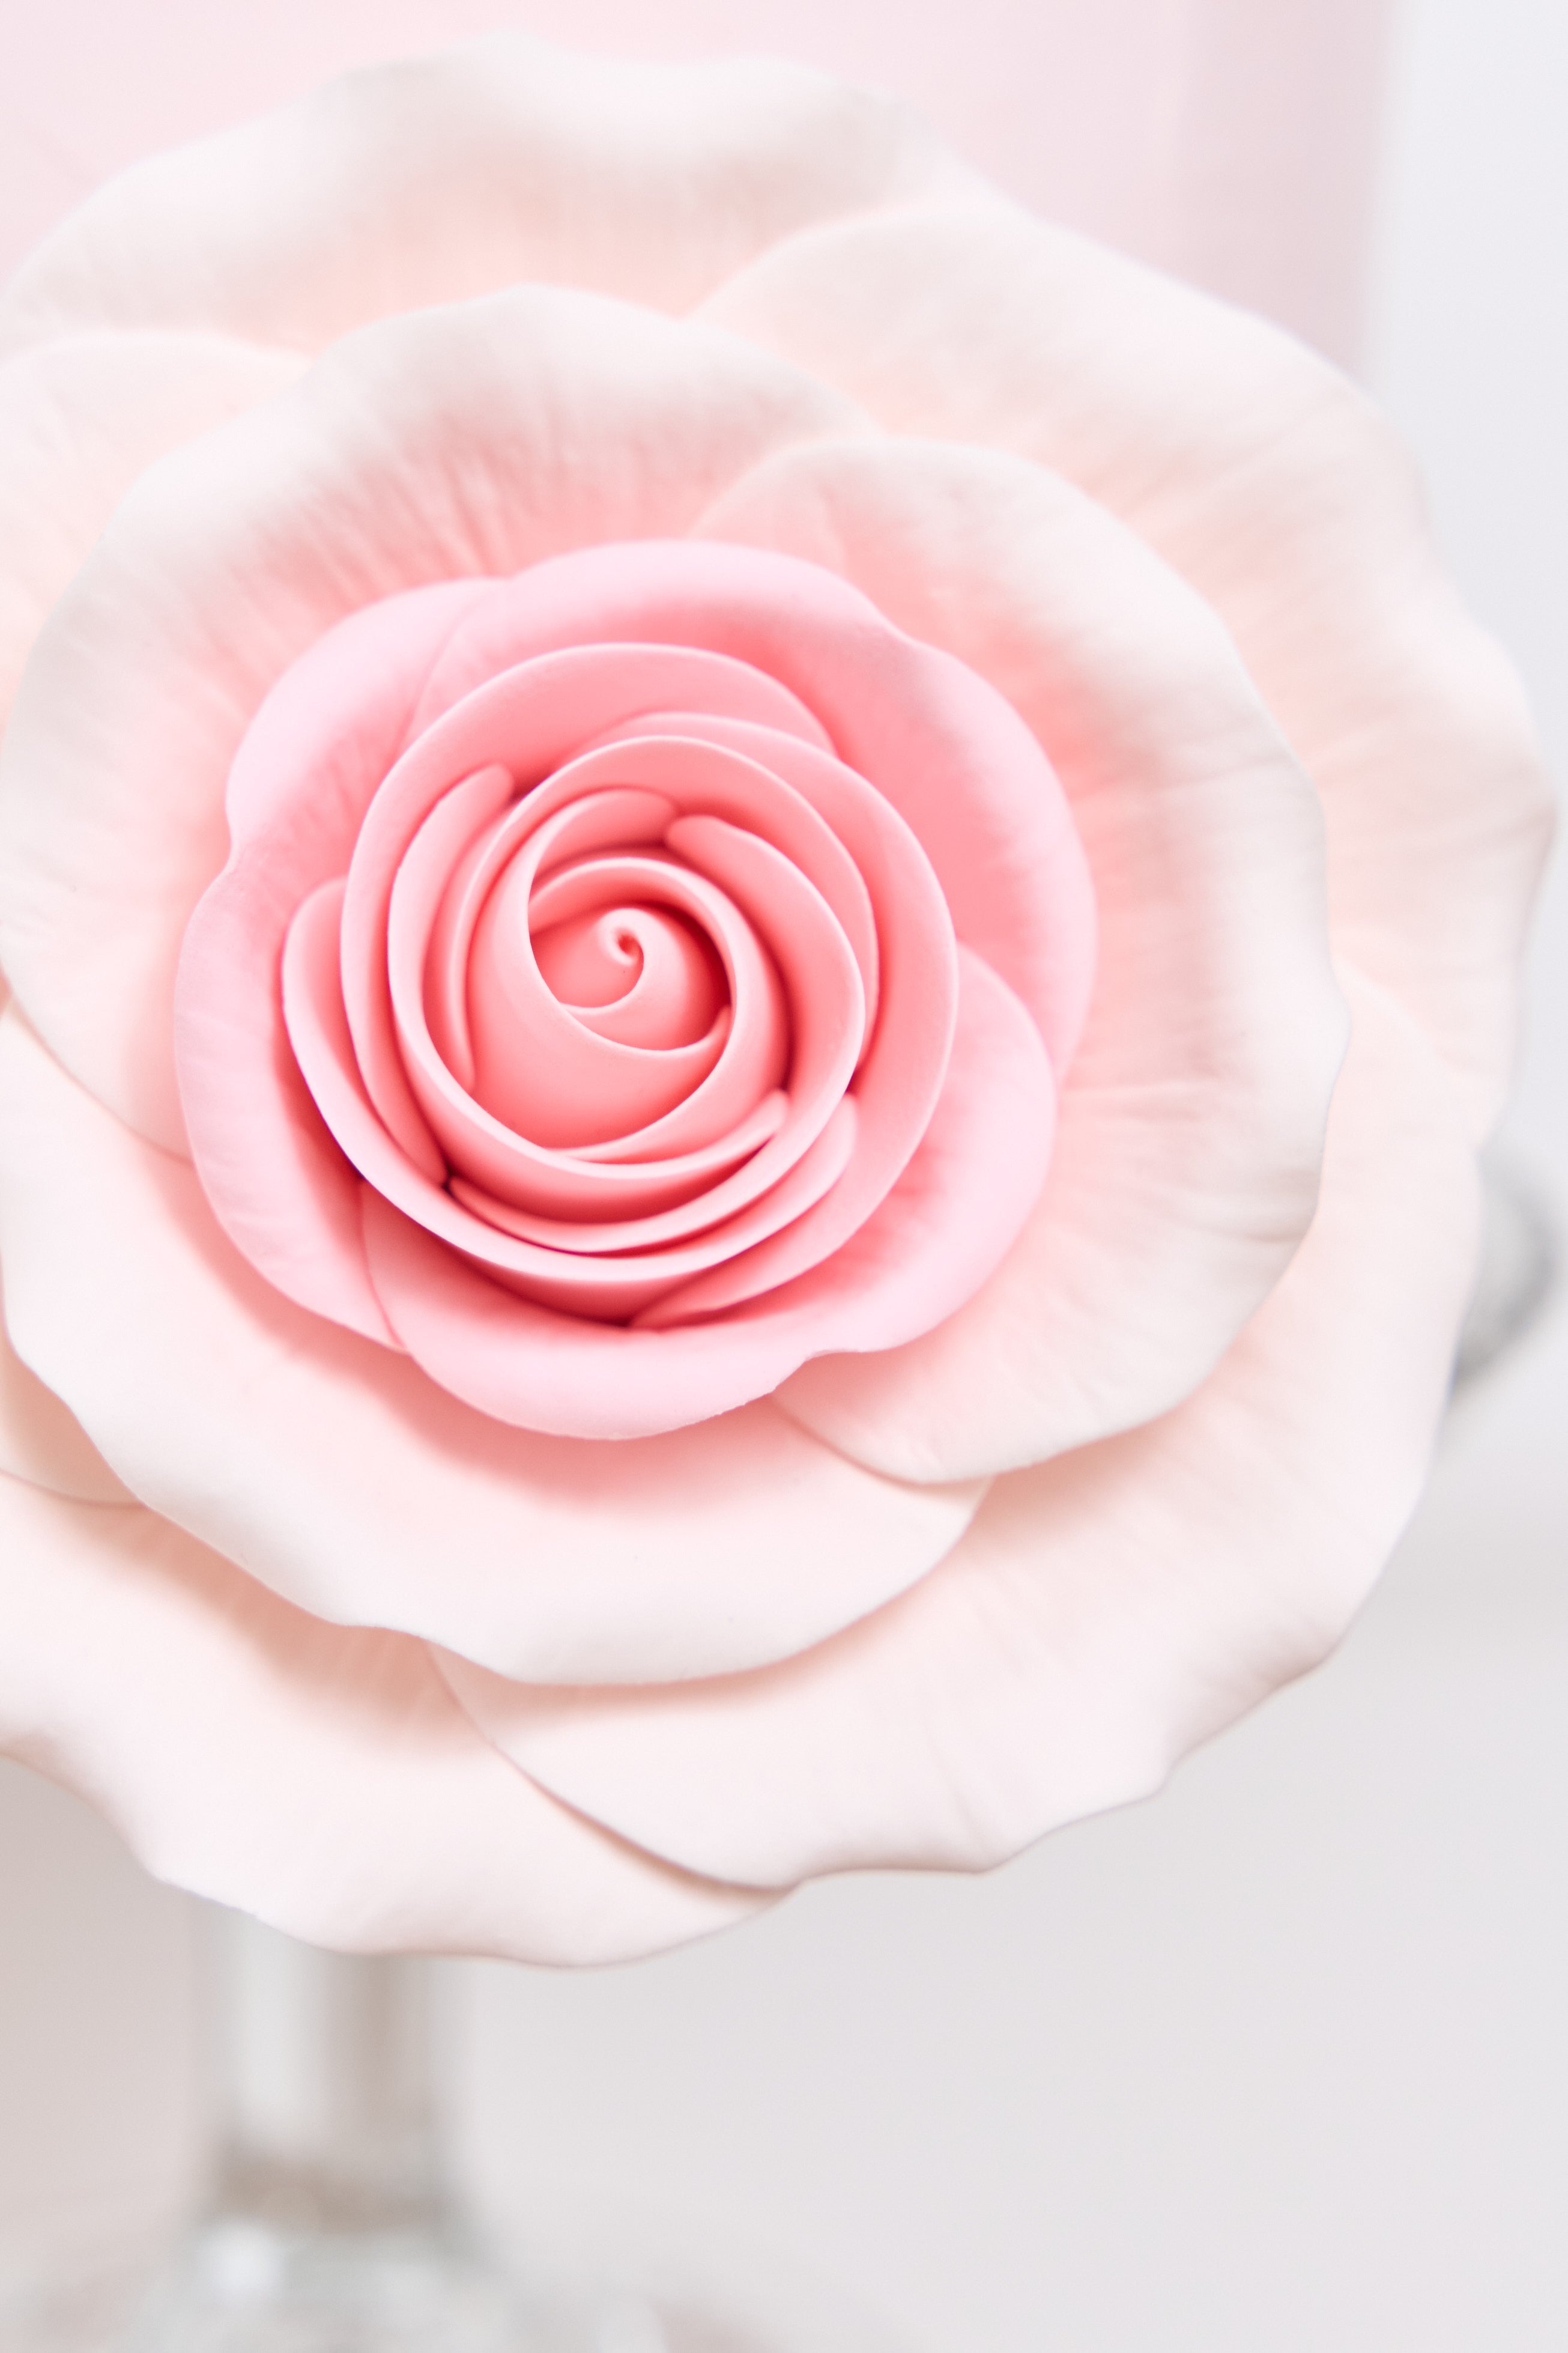 Detalle de flor de azúcar grande rosa pálido